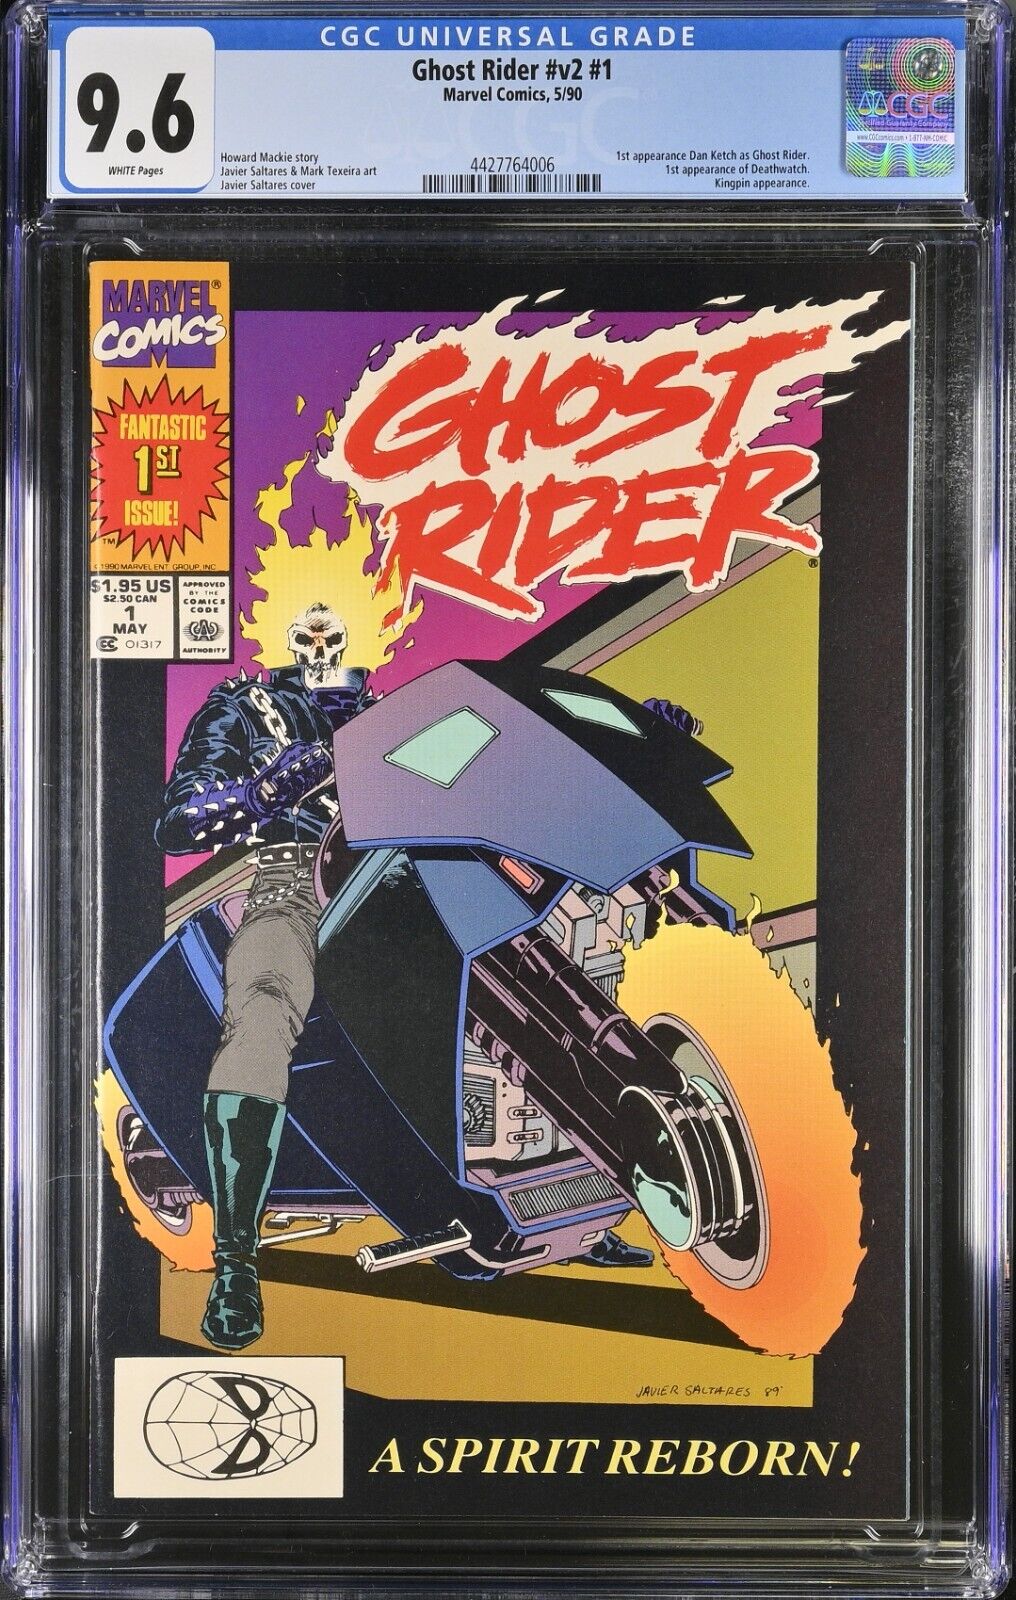 Ghost Rider v2 #1 CGC 9.6 WHITE SHIPPS FREE Key 1st Danny Ketch HOT Blood Hunt